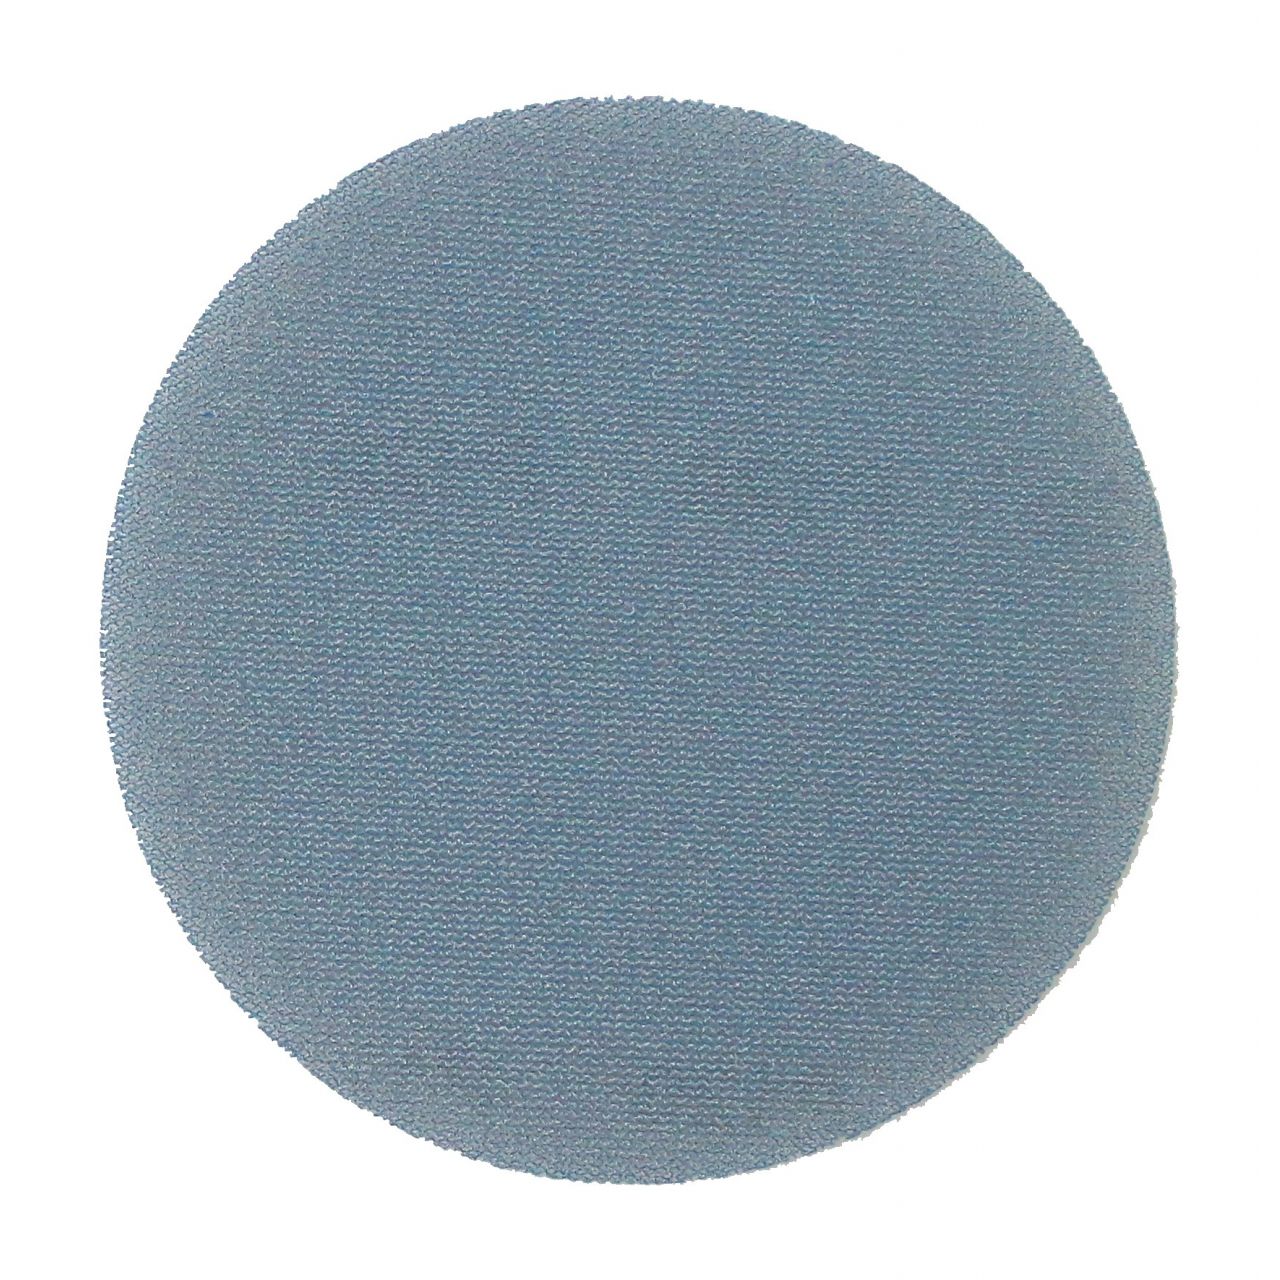 50 Discos de malla abrasiva autoadherente azul MAB (125/240)